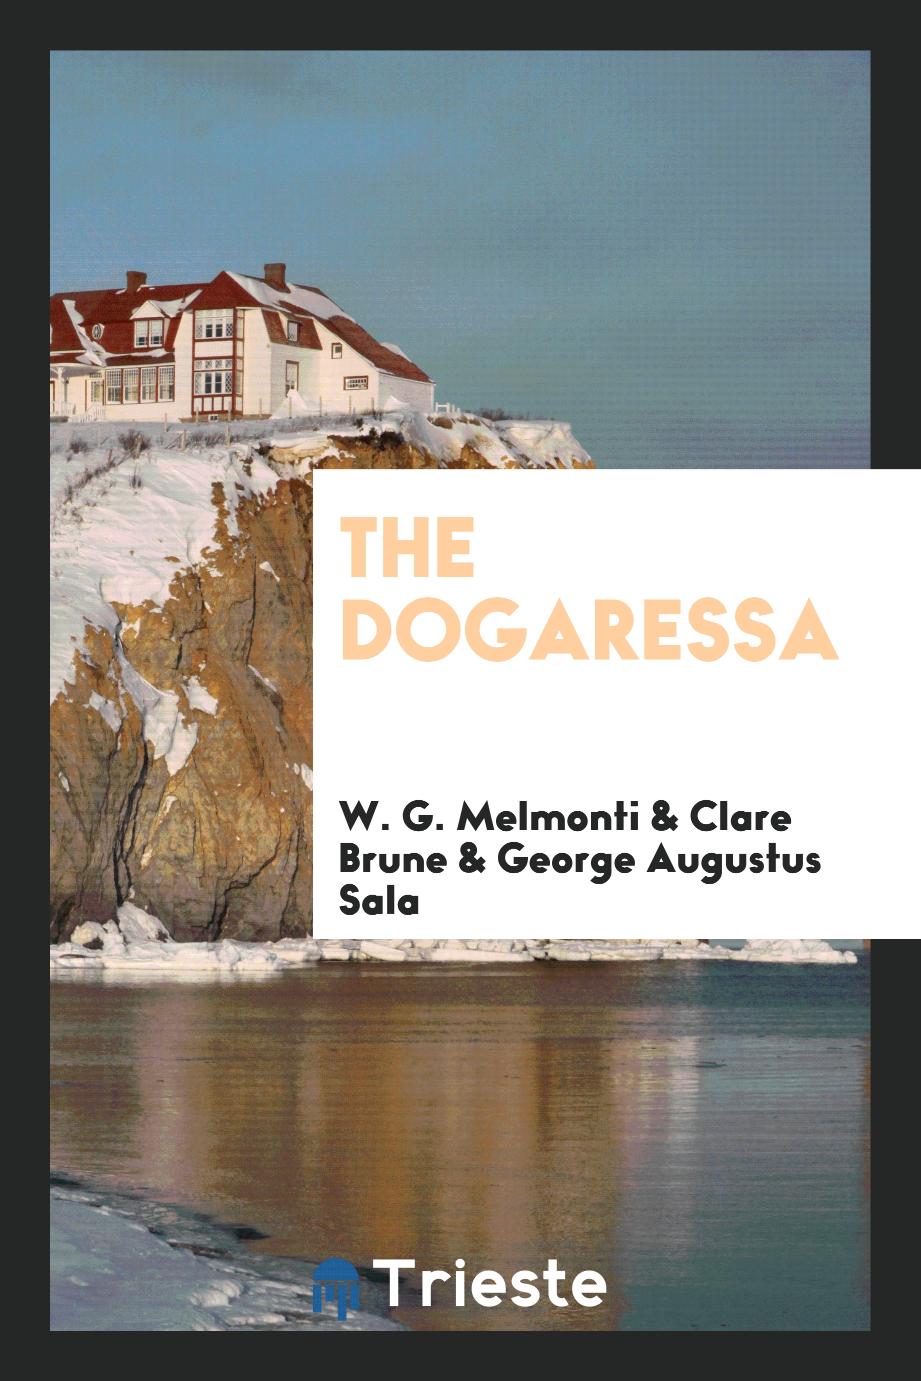 The Dogaressa